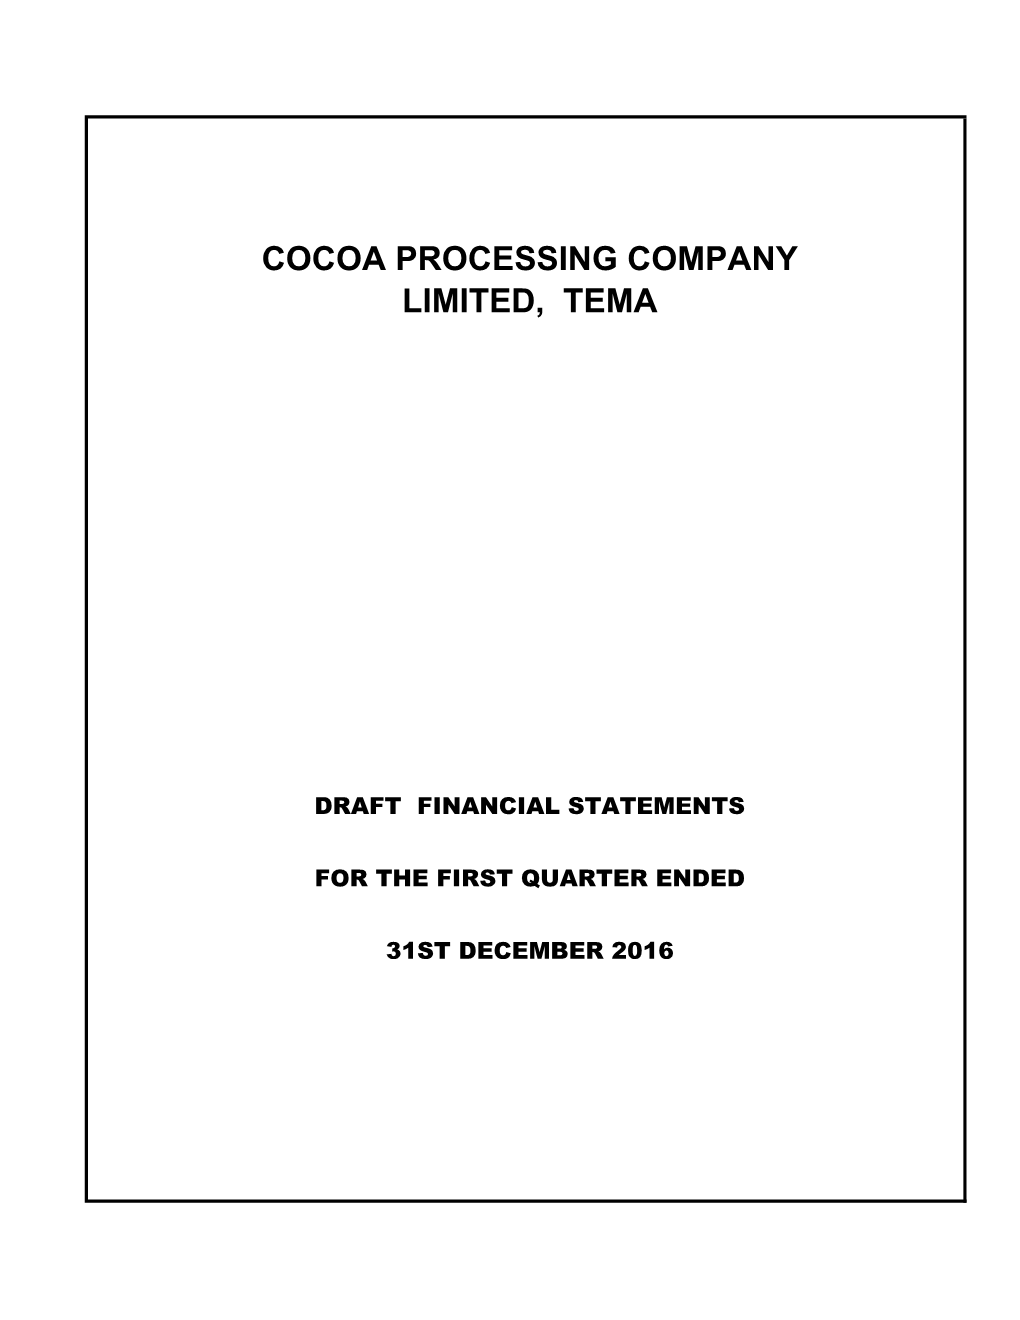 Limited, Tema Cocoa Processing Company